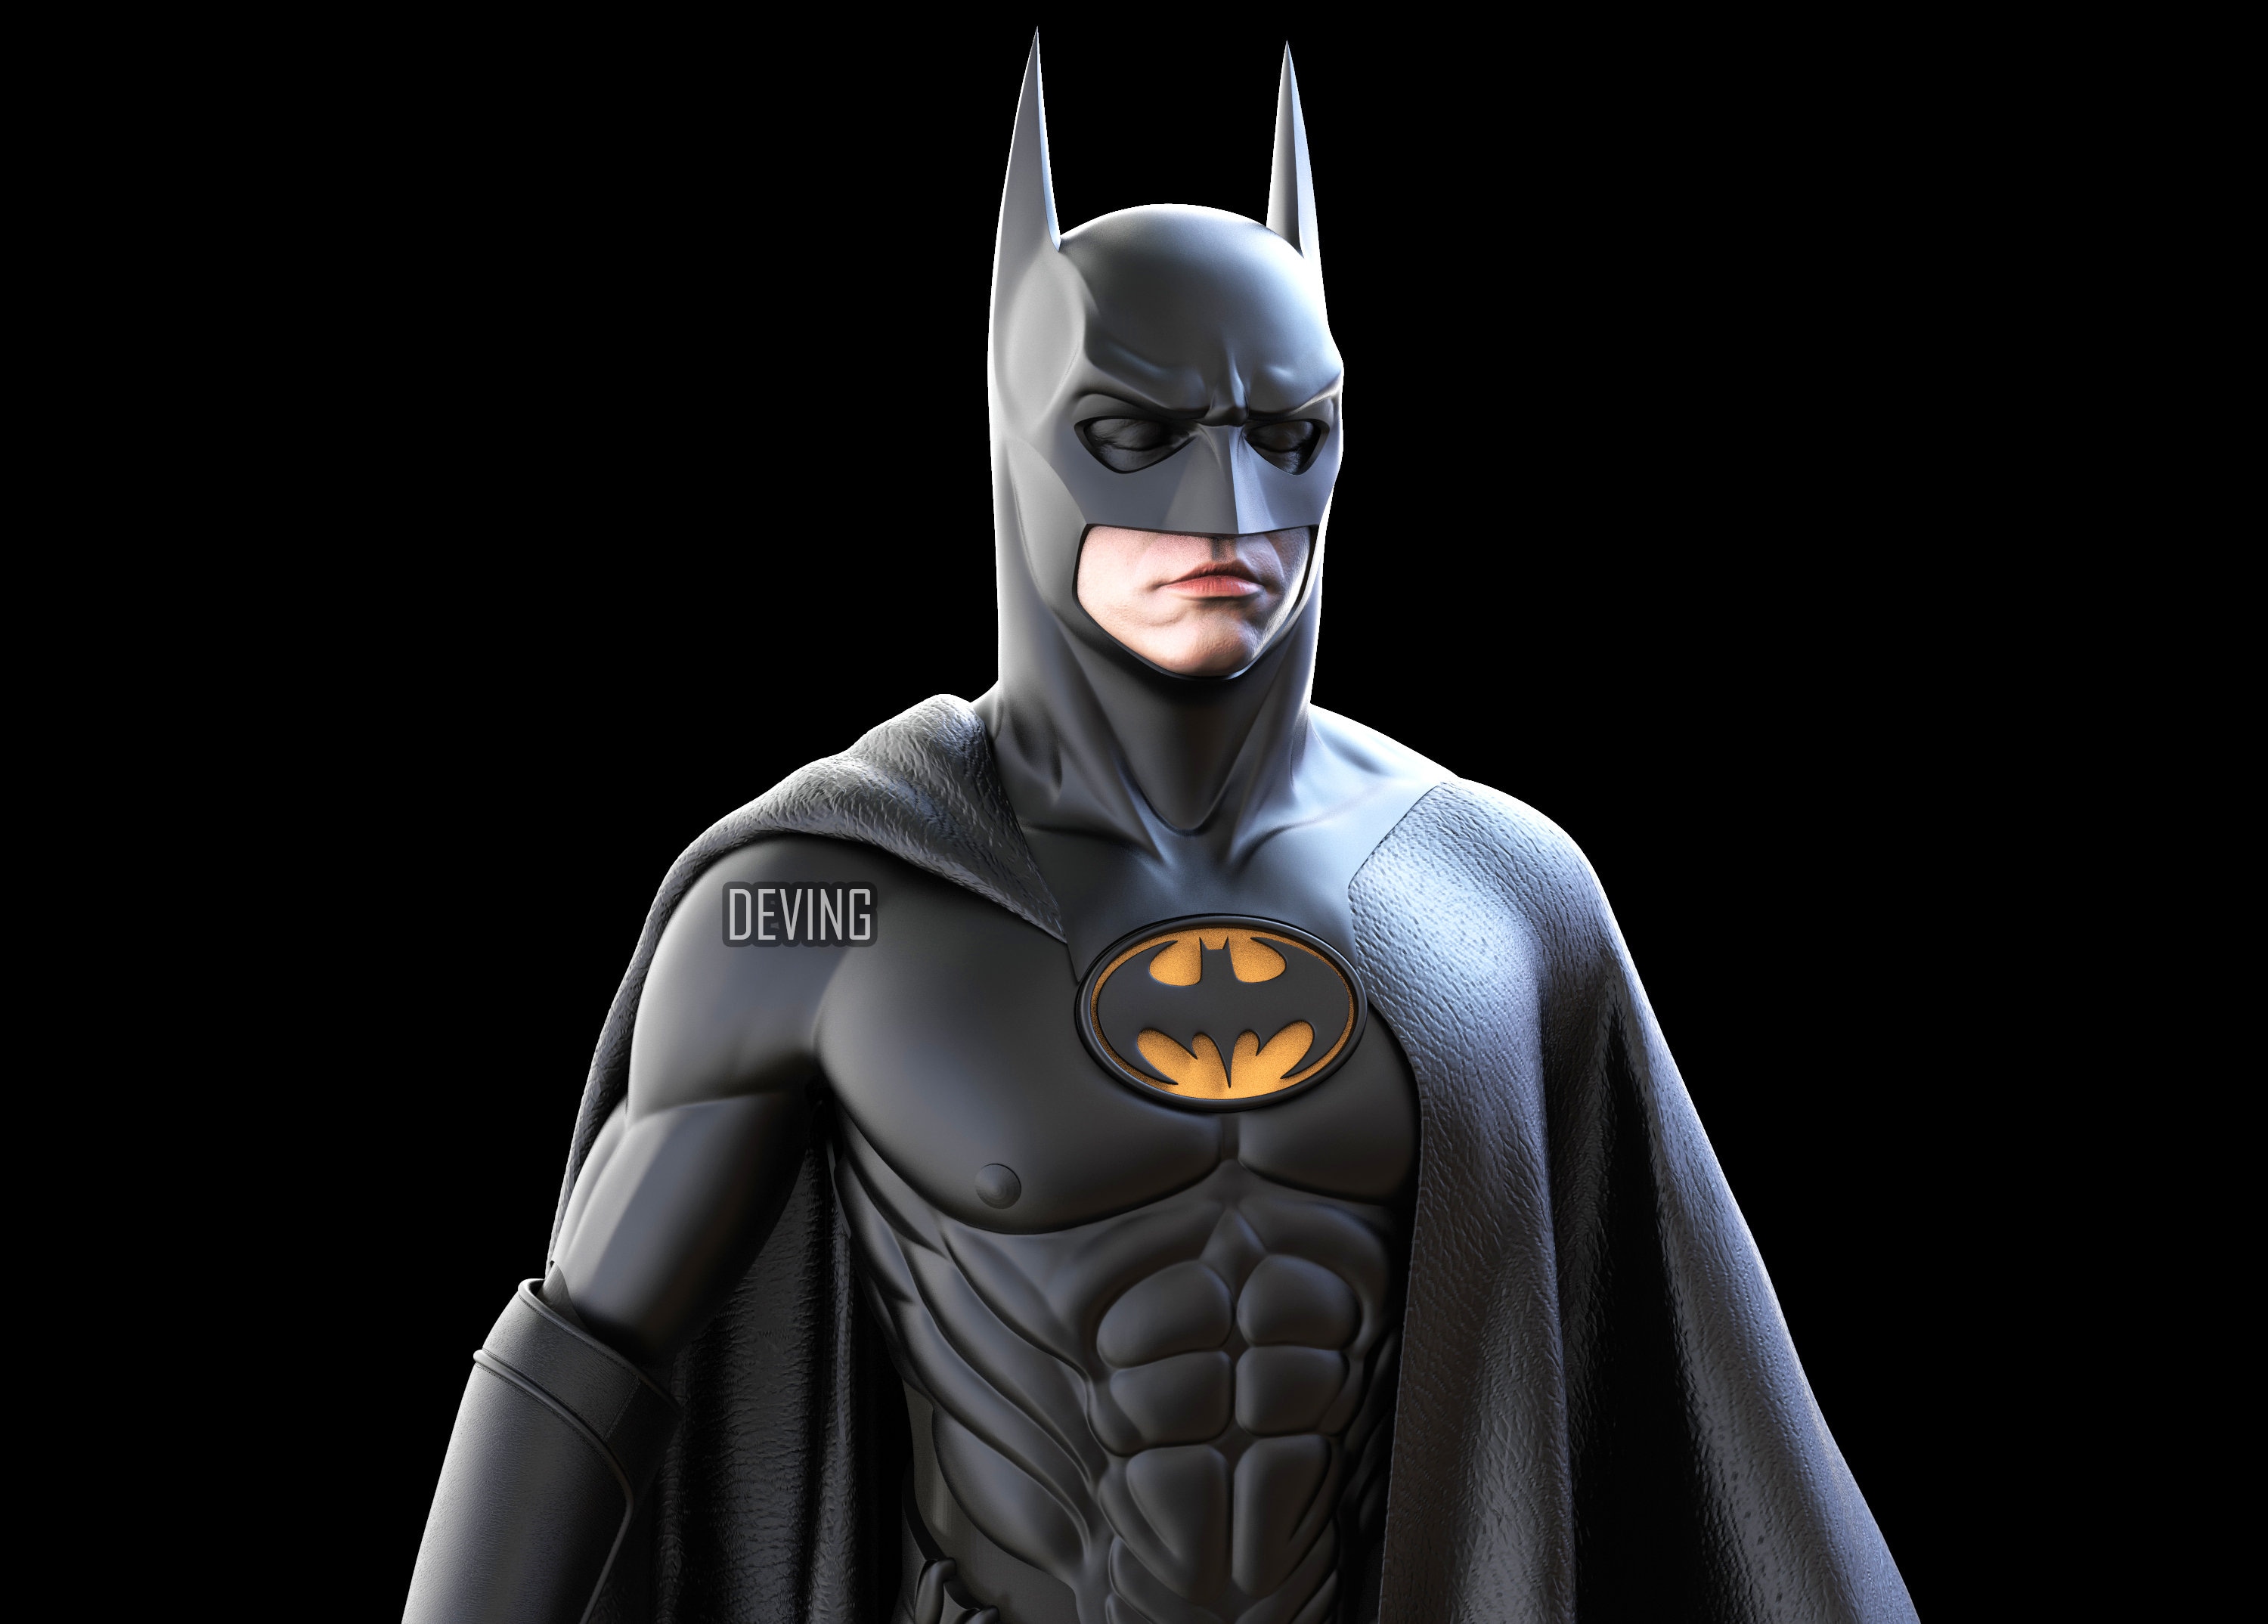 BAT FOREVER Suit 3D Printable FILES - Etsy